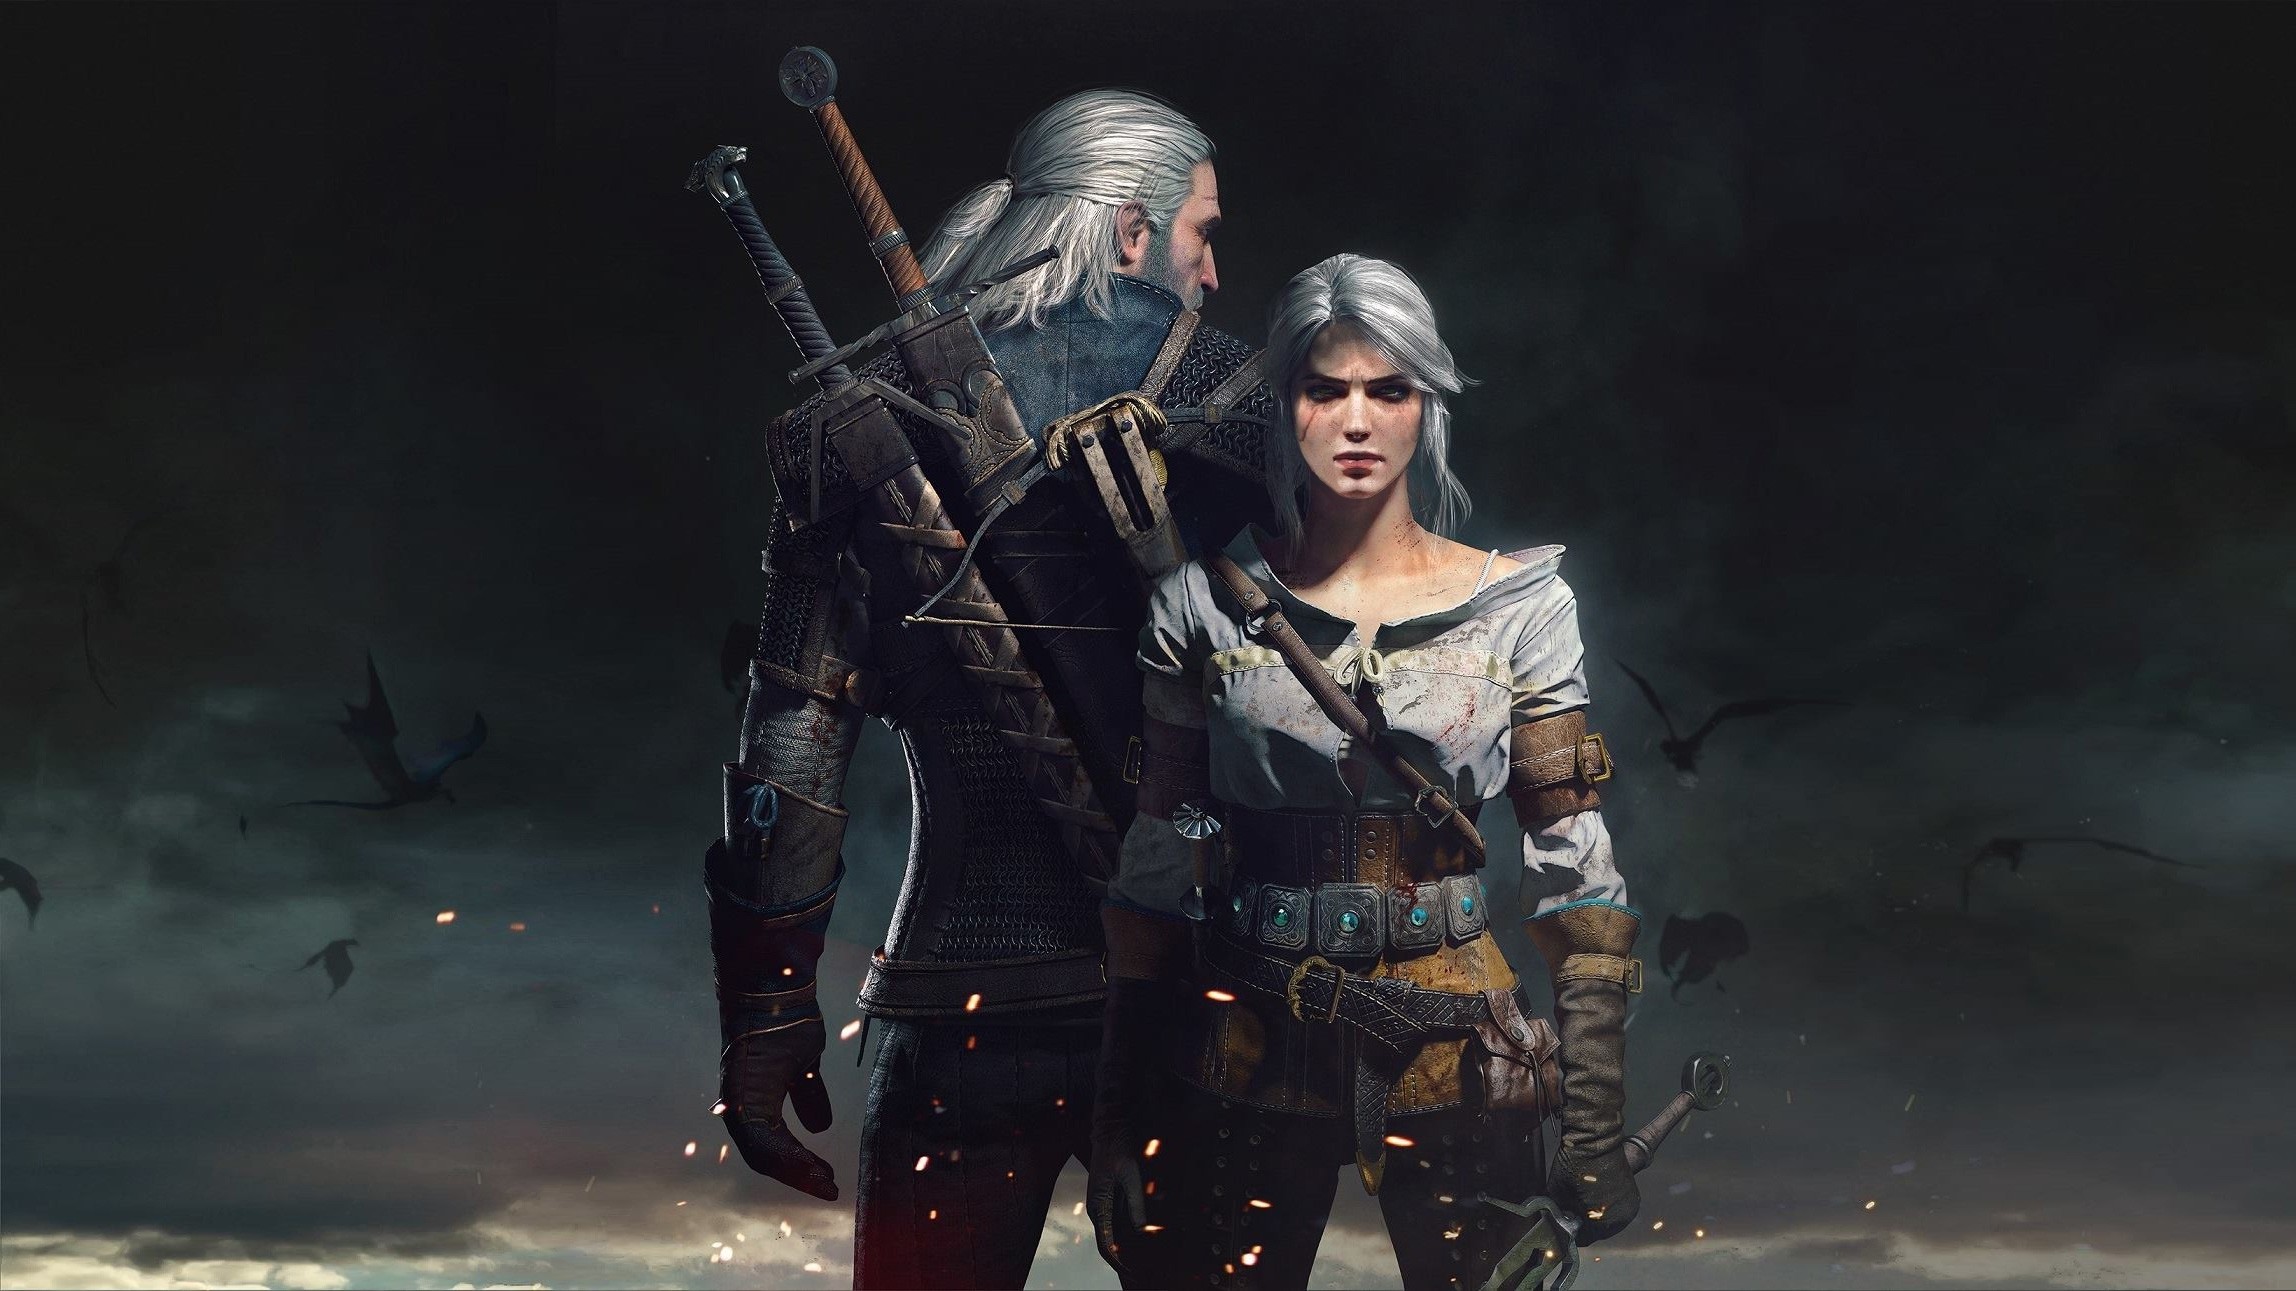 The Witcher 3: Wild Hunt, Video Games, Artwork, Geralt Of Rivia, Cirilla Fiona Elen Riannon Wallpaper